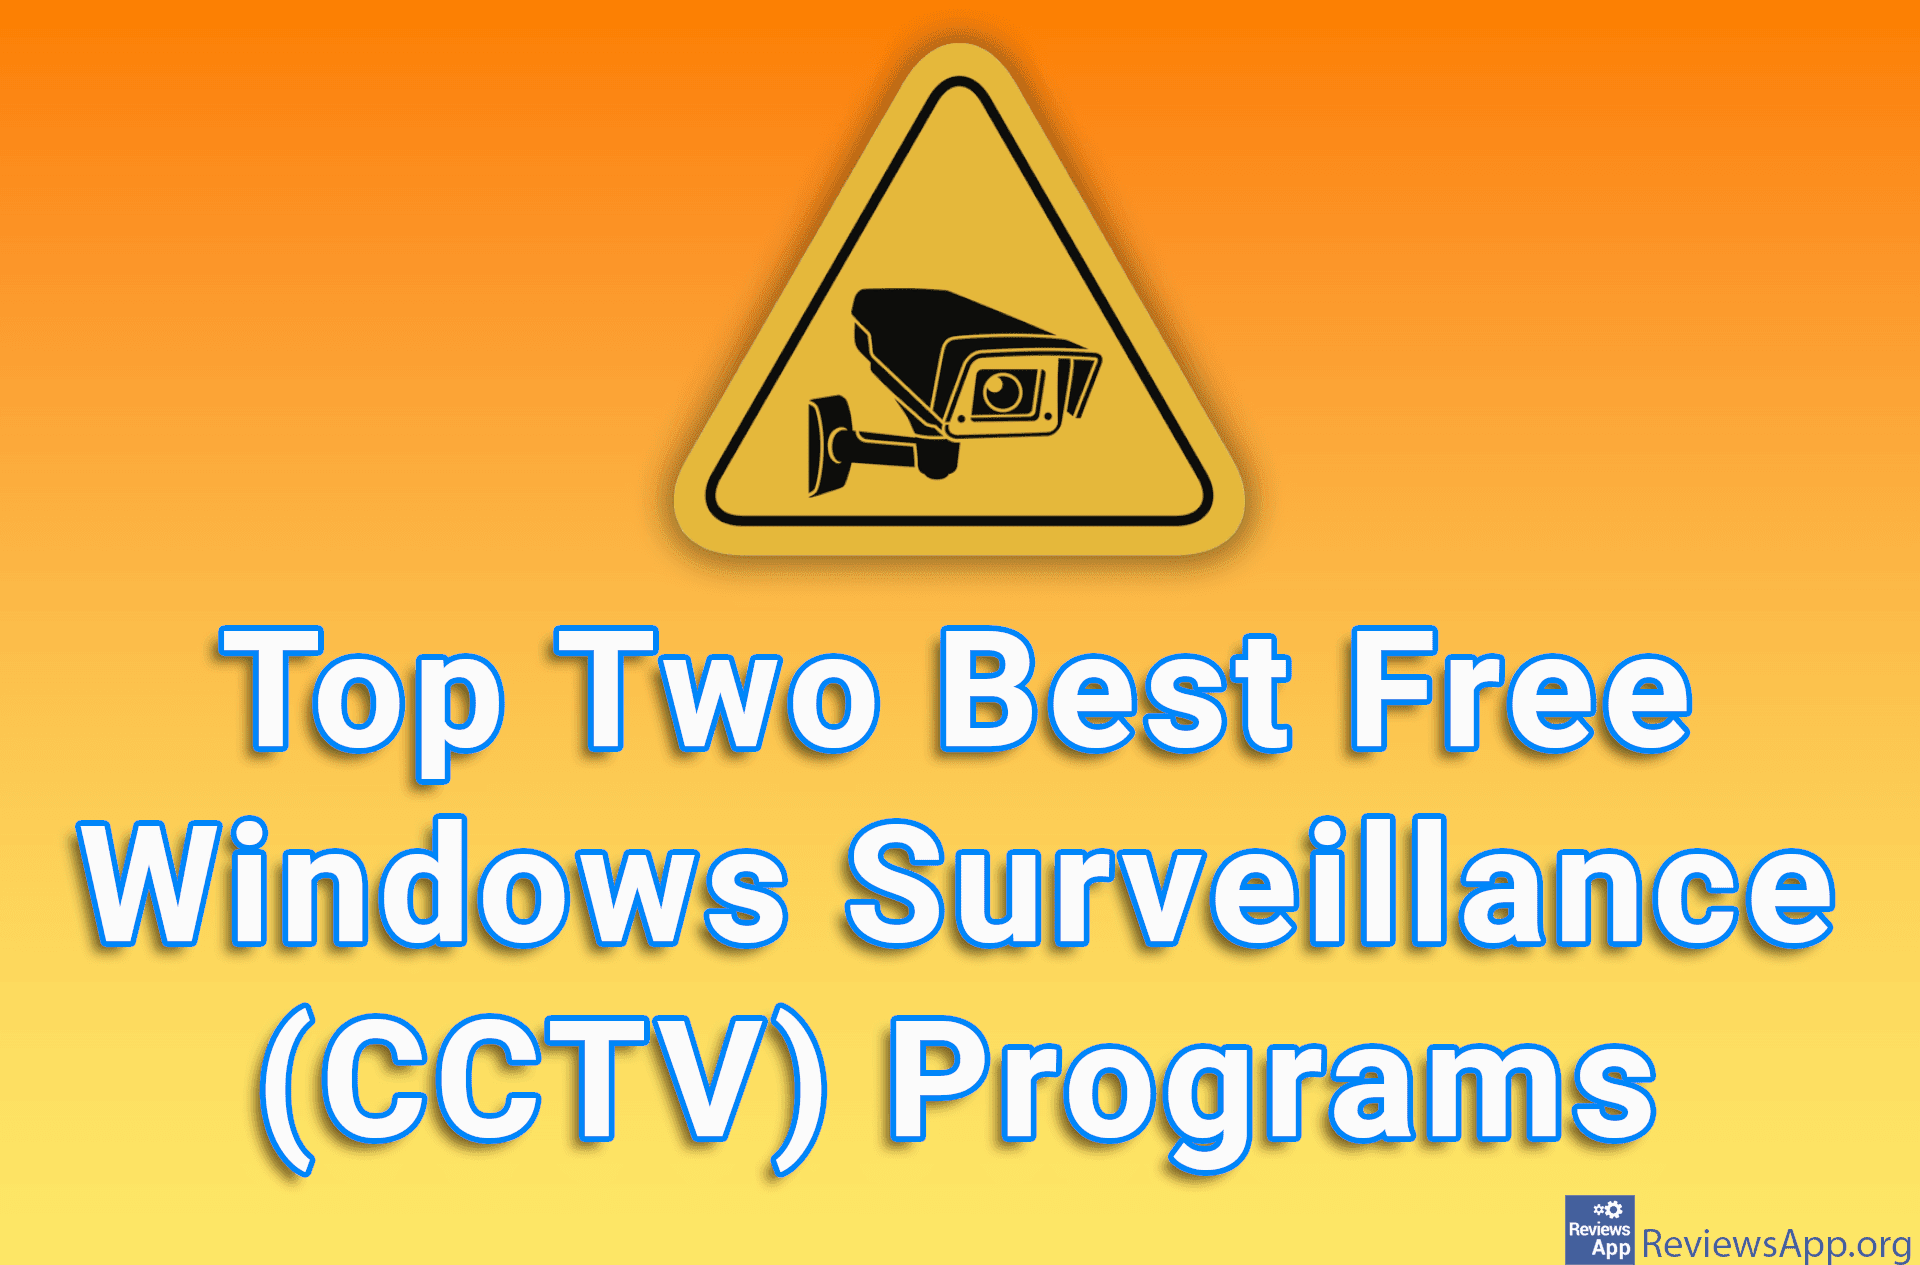 Top Two Best Free Windows Surveillance (CCTV) Programs